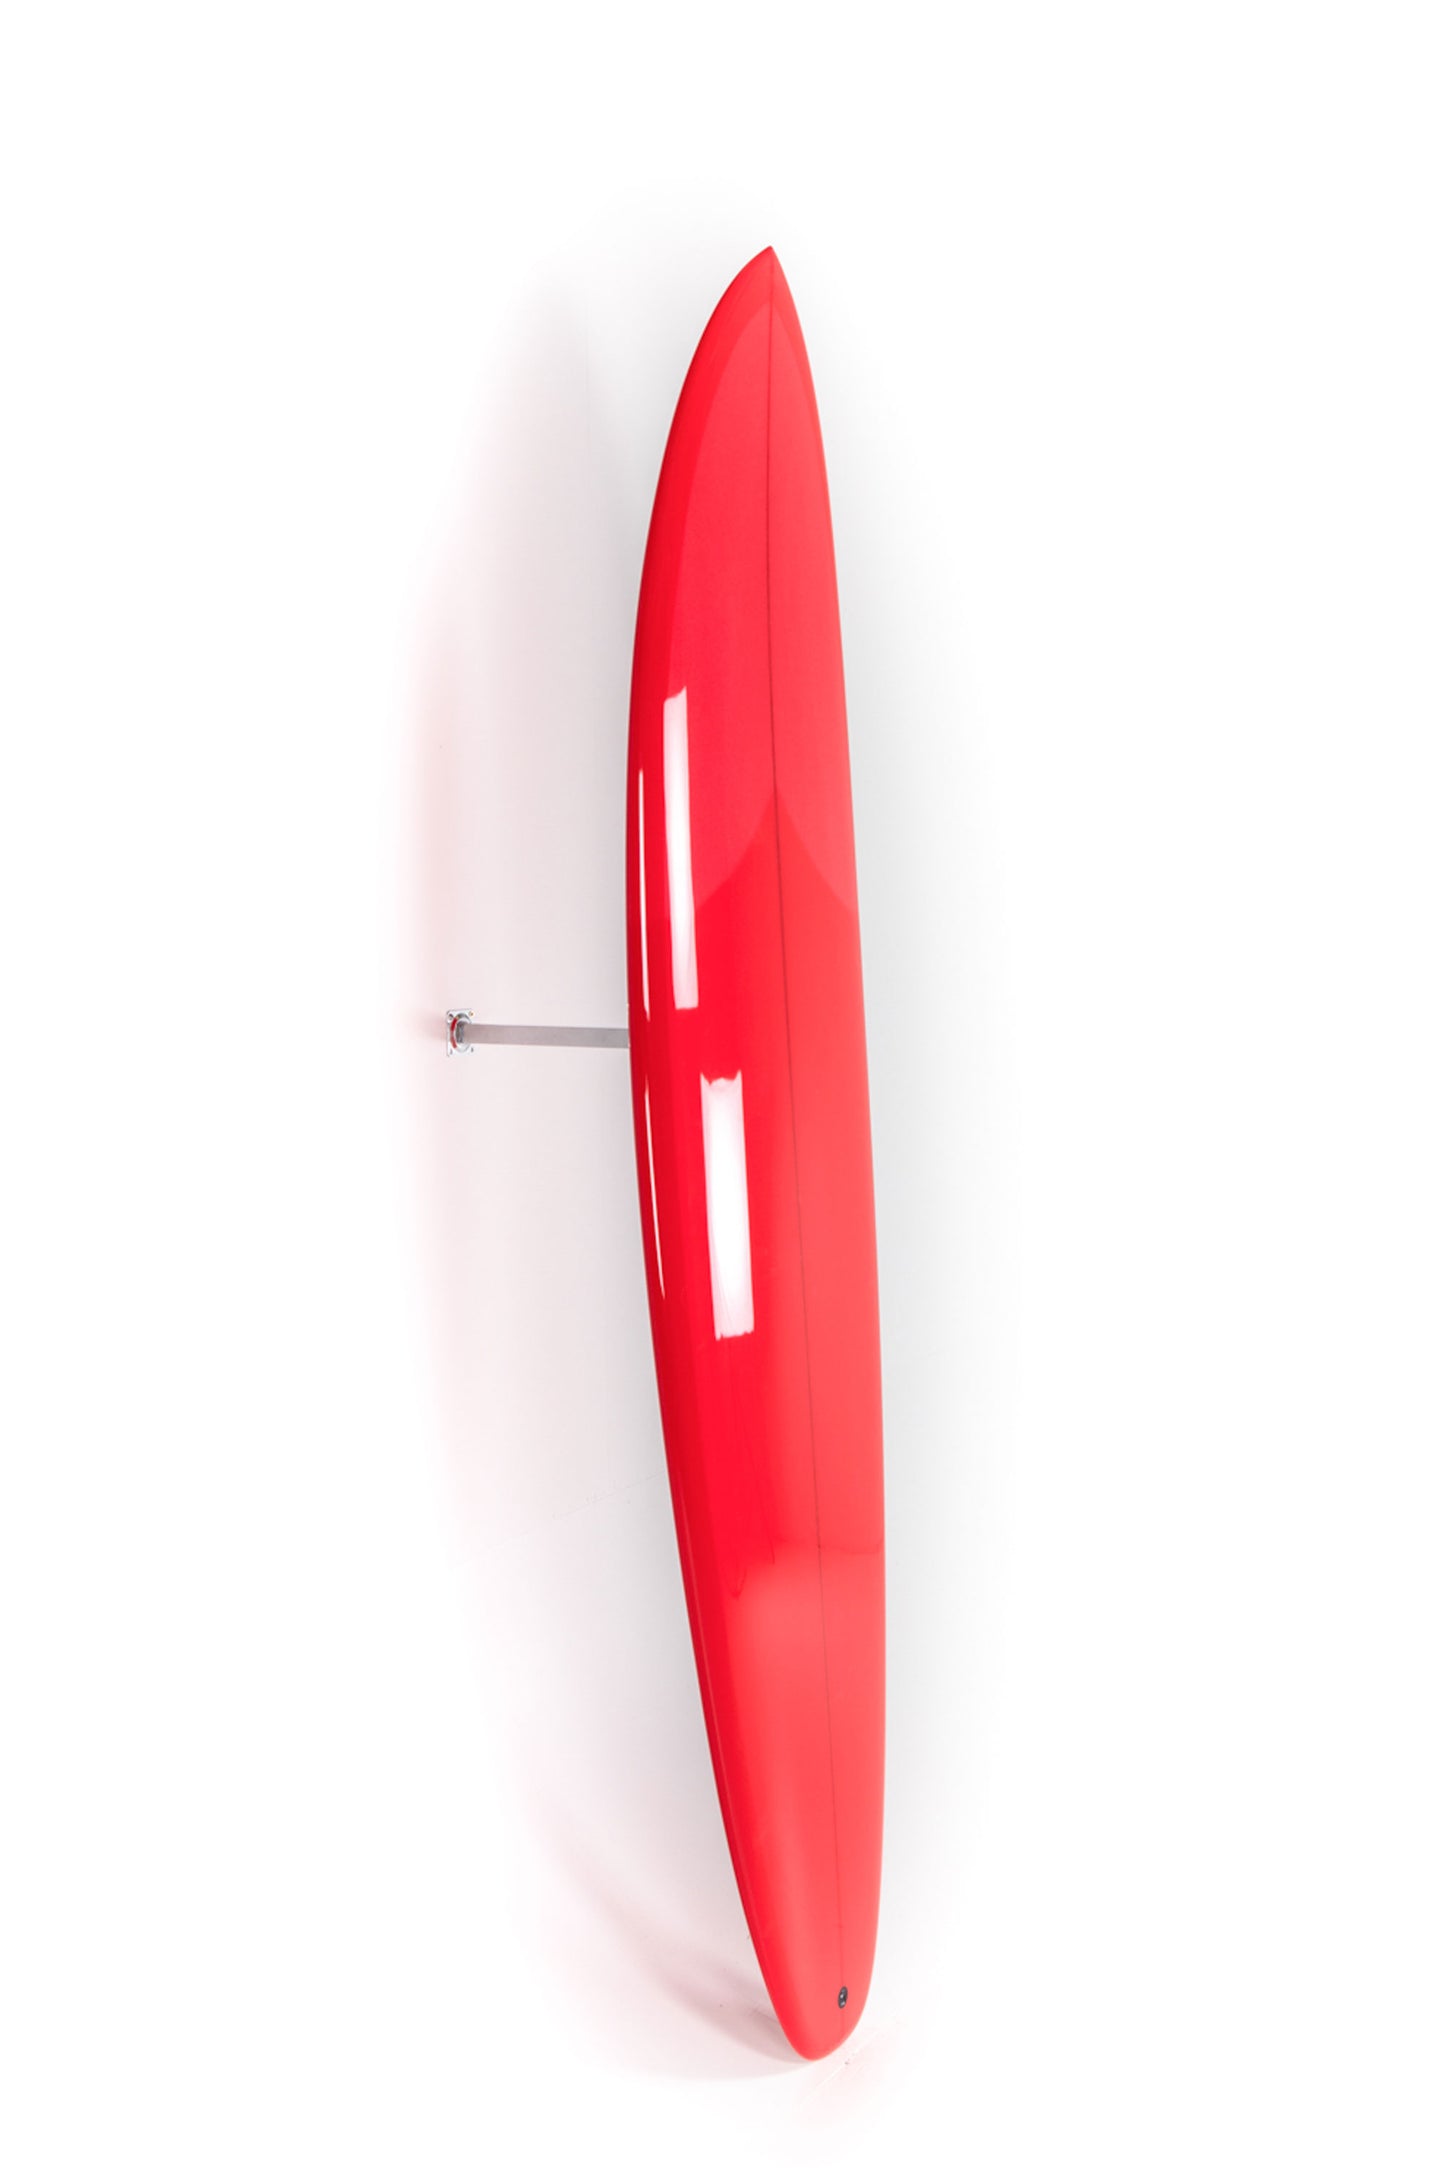 
                  
                    Pukas-Surf-Shop-Christenson-Surfboards-Flat-Tracker-20-7_2_-CX02095
                  
                